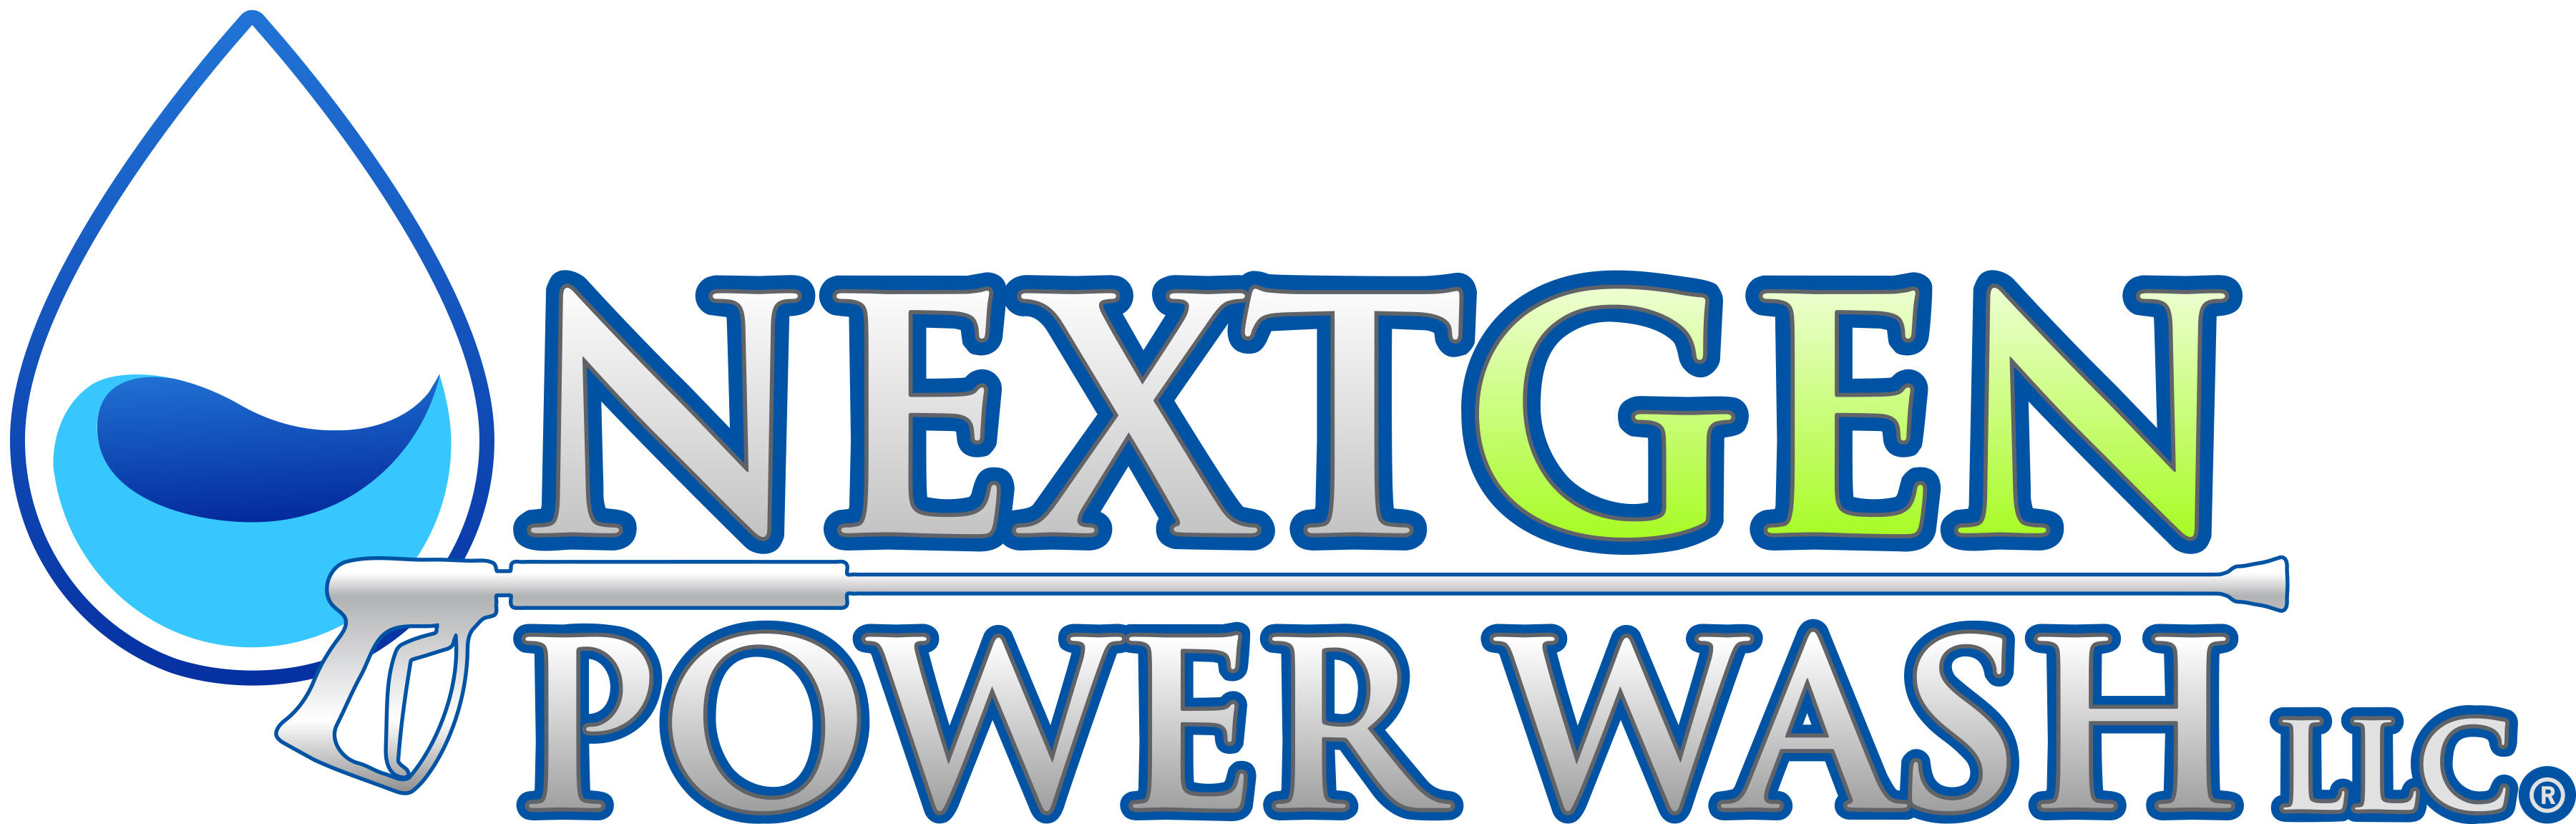 NextGen Power Wash LLC Logo Danville Pennsylvania